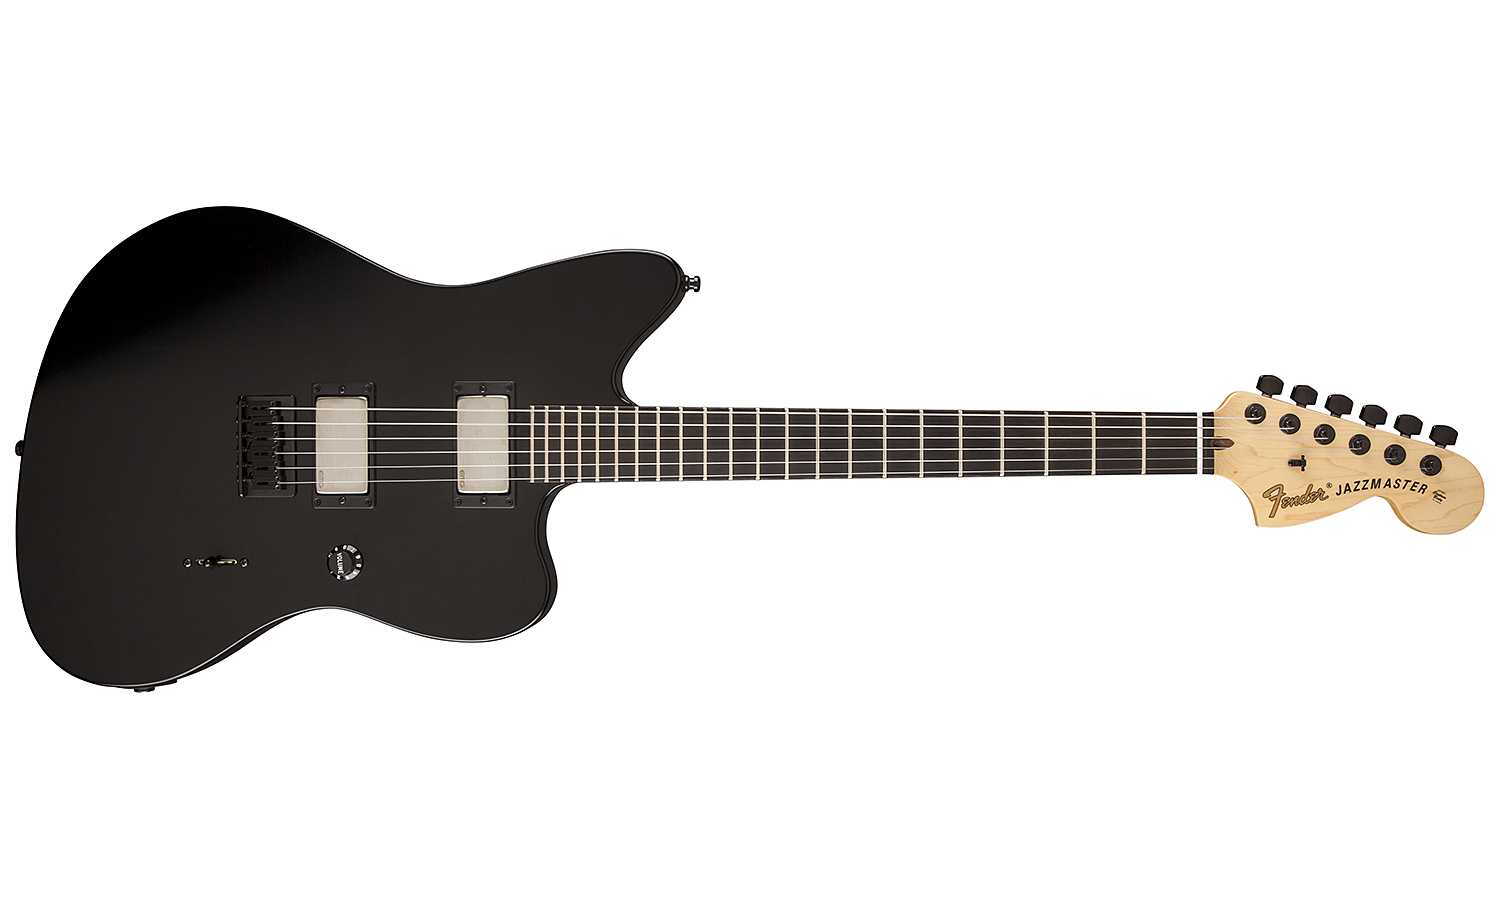 Fender Jim Root Jazzmaster Usa 2h Emg Ht Eb - Flat Black - Guitarra electrica retro rock - Variation 1